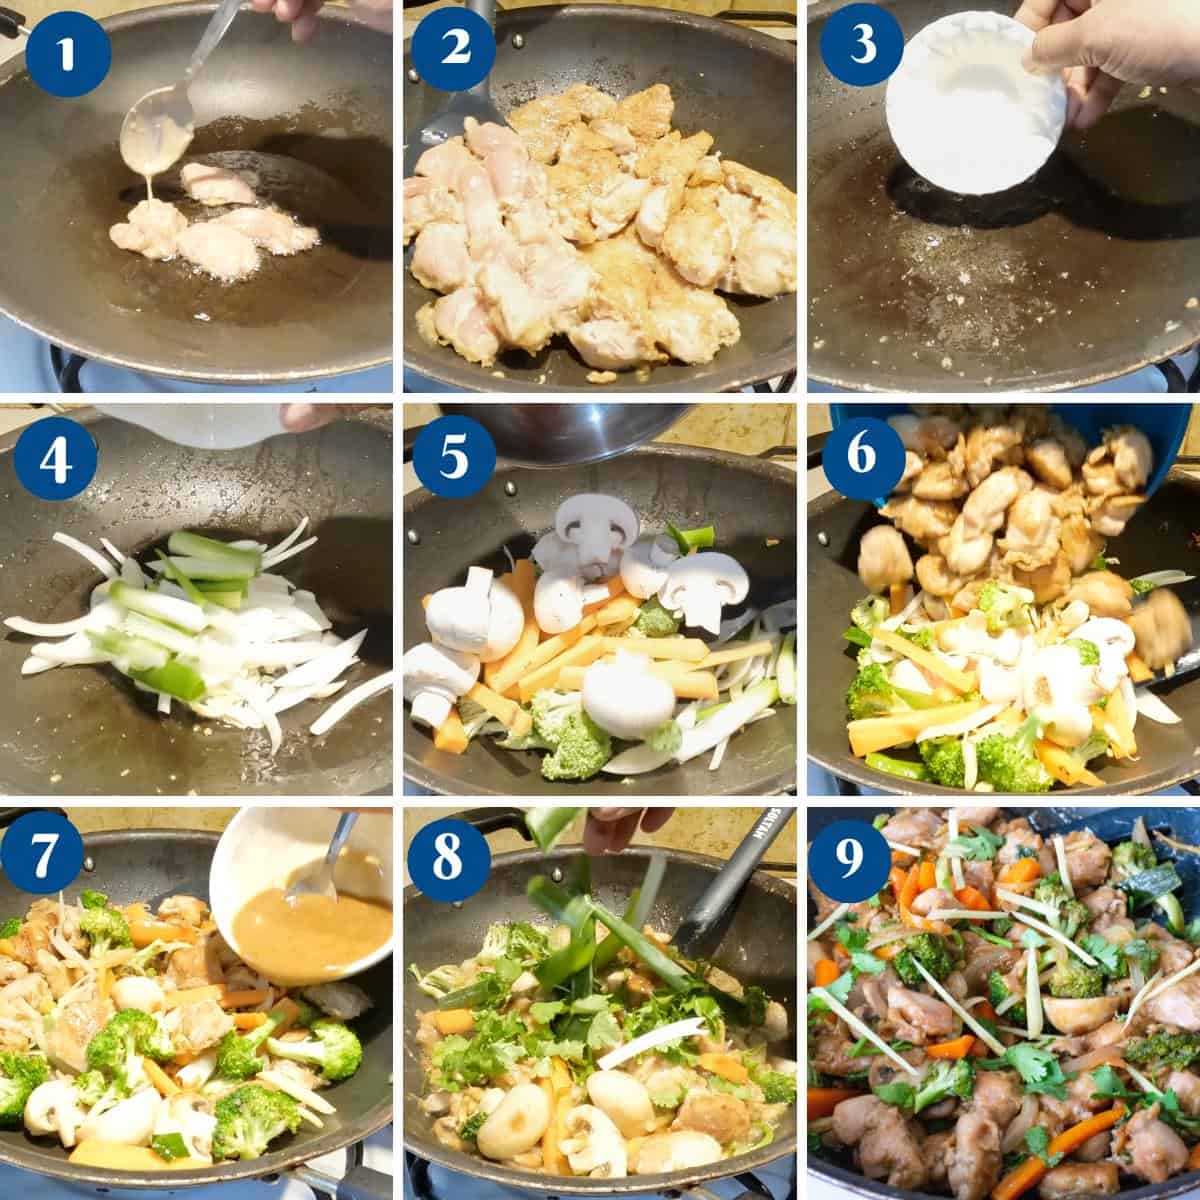 Progress pictures for making ginger chicken stir fry.